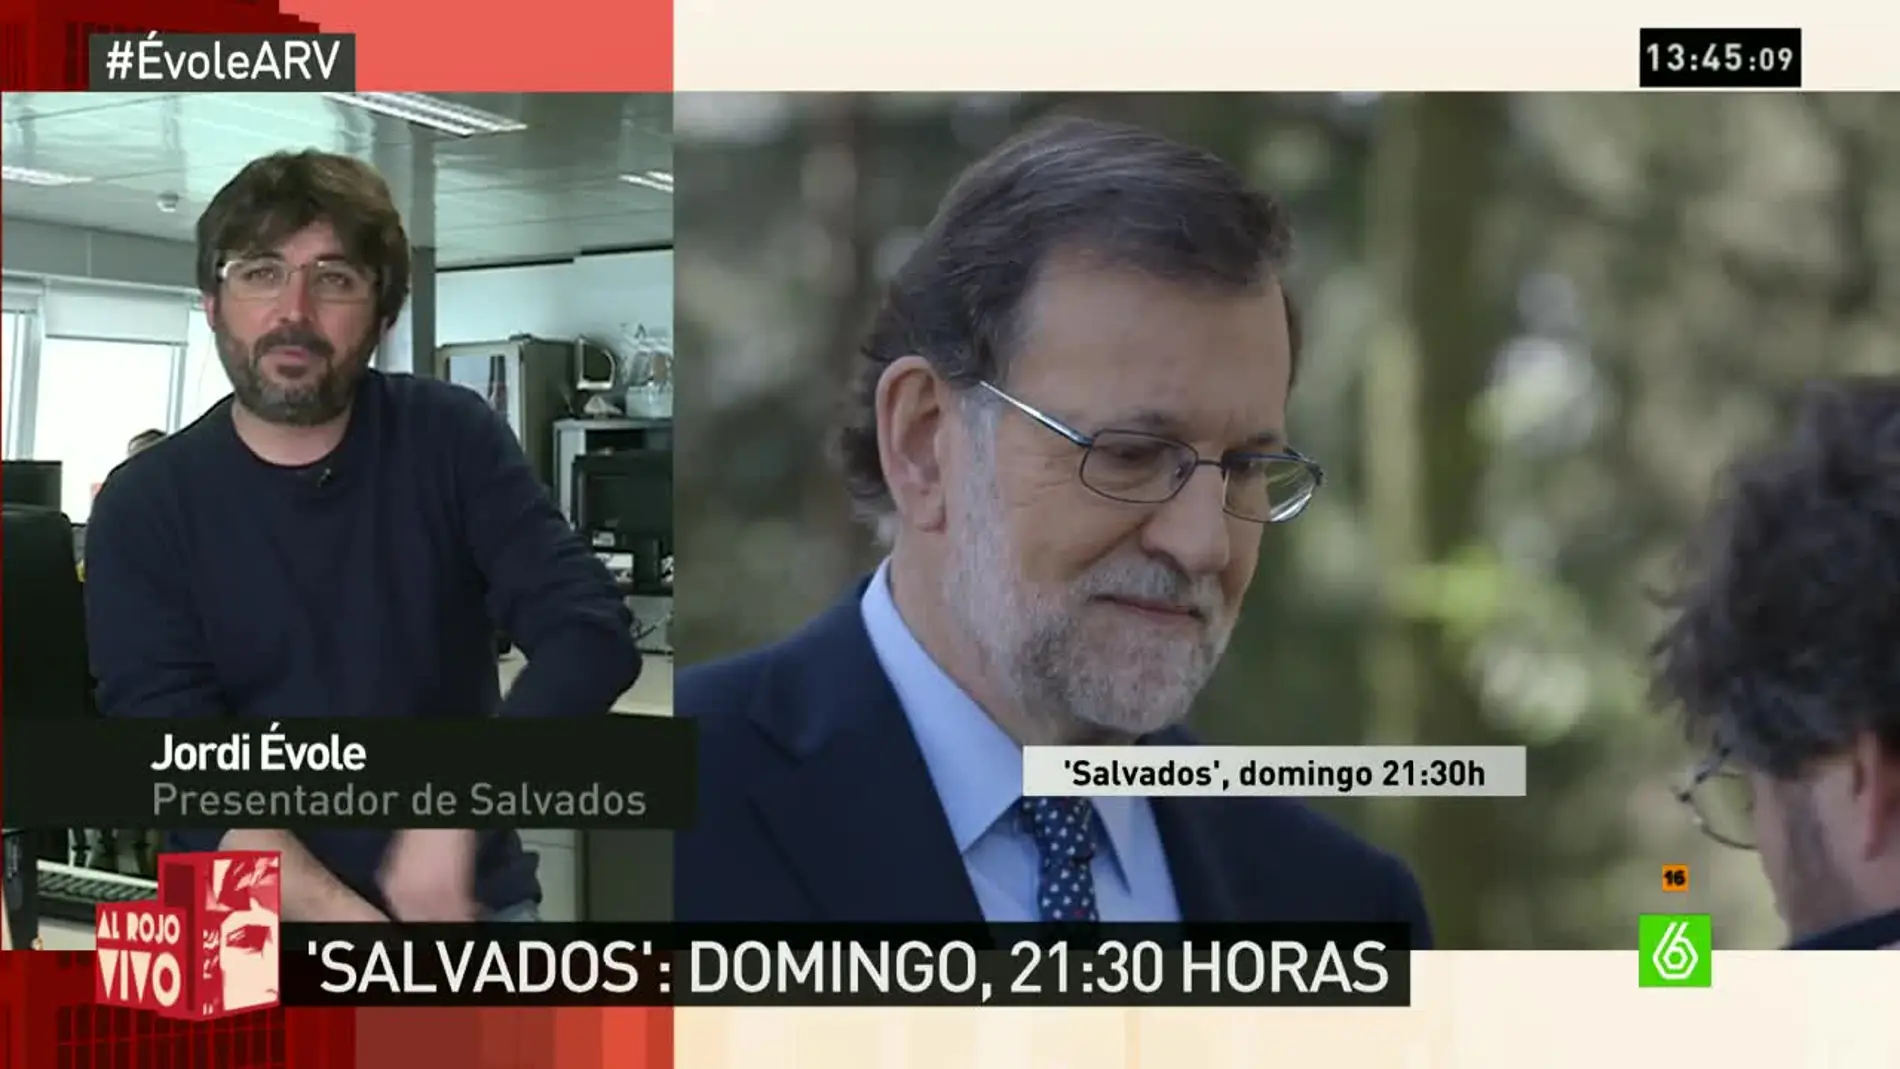 Rajoy evole arv